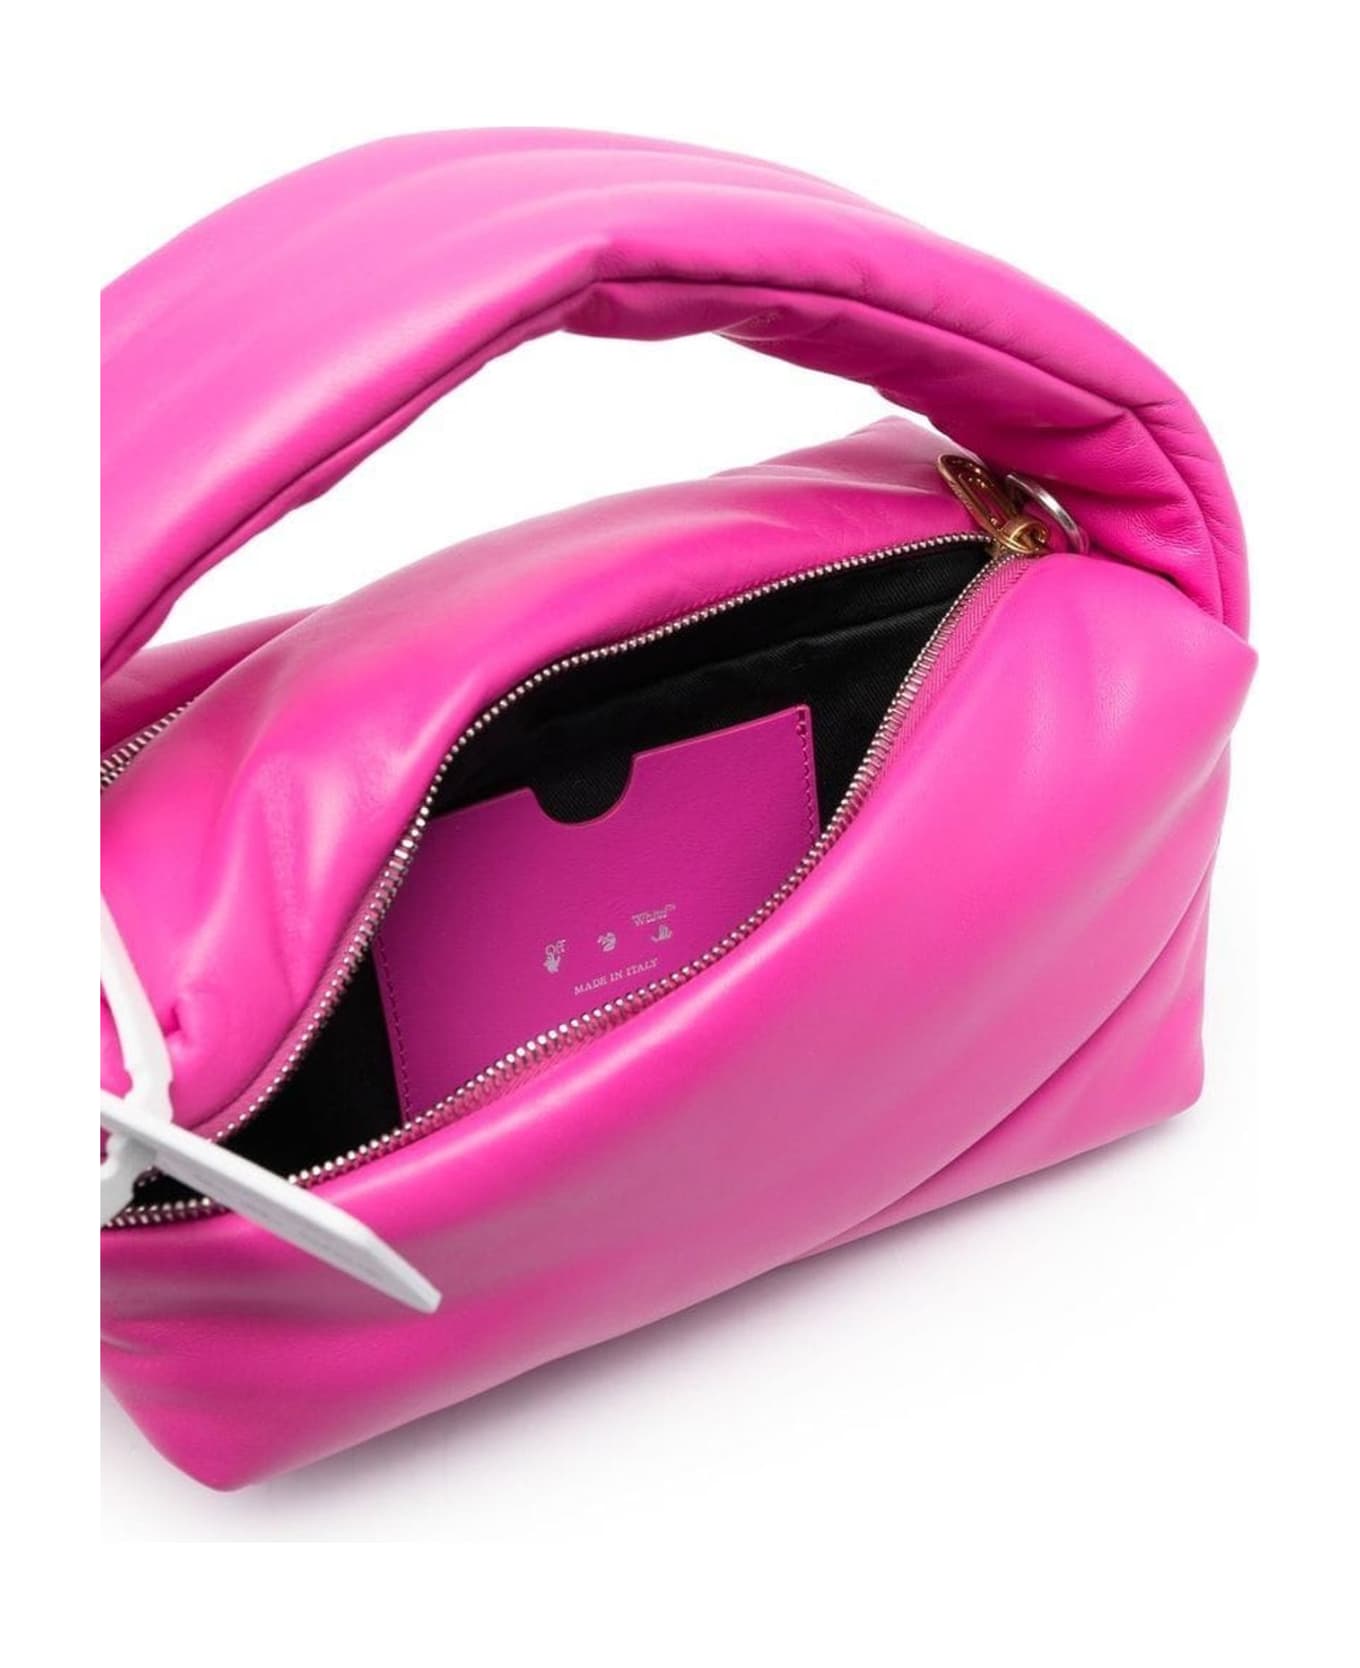 Off-White Pink Leather Pump 24 Handbag - Fuxia